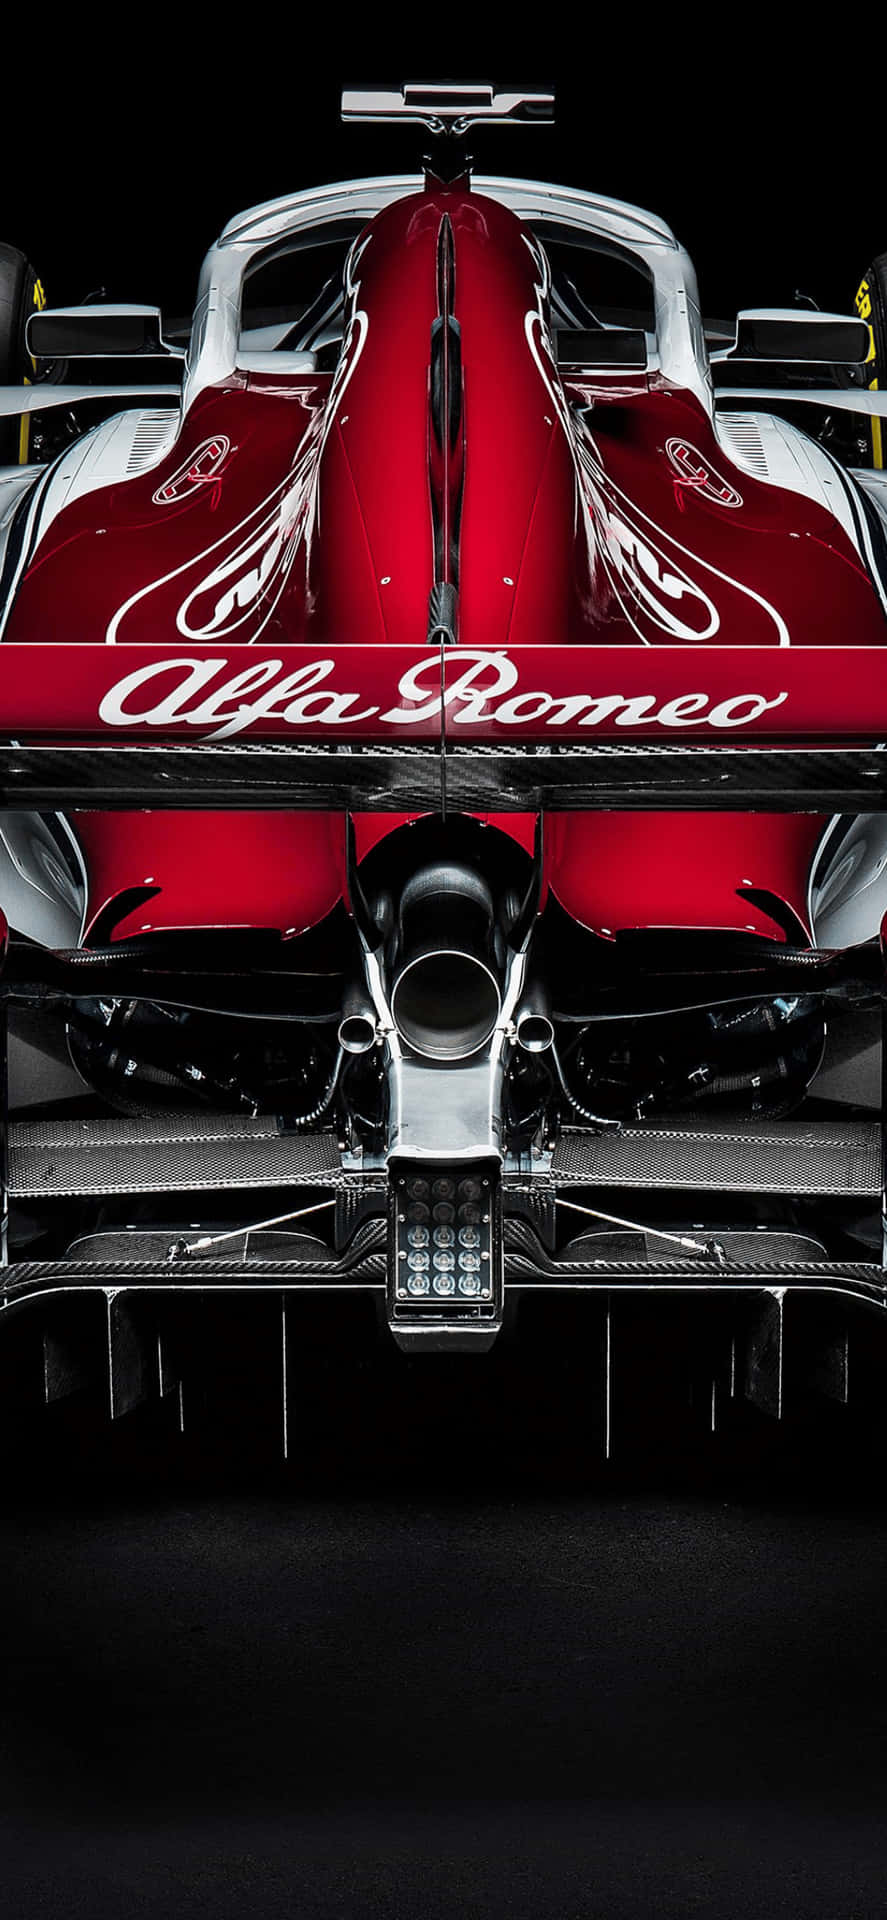 Sfondoalfa Romeo Per Iphone Xs F1 2018